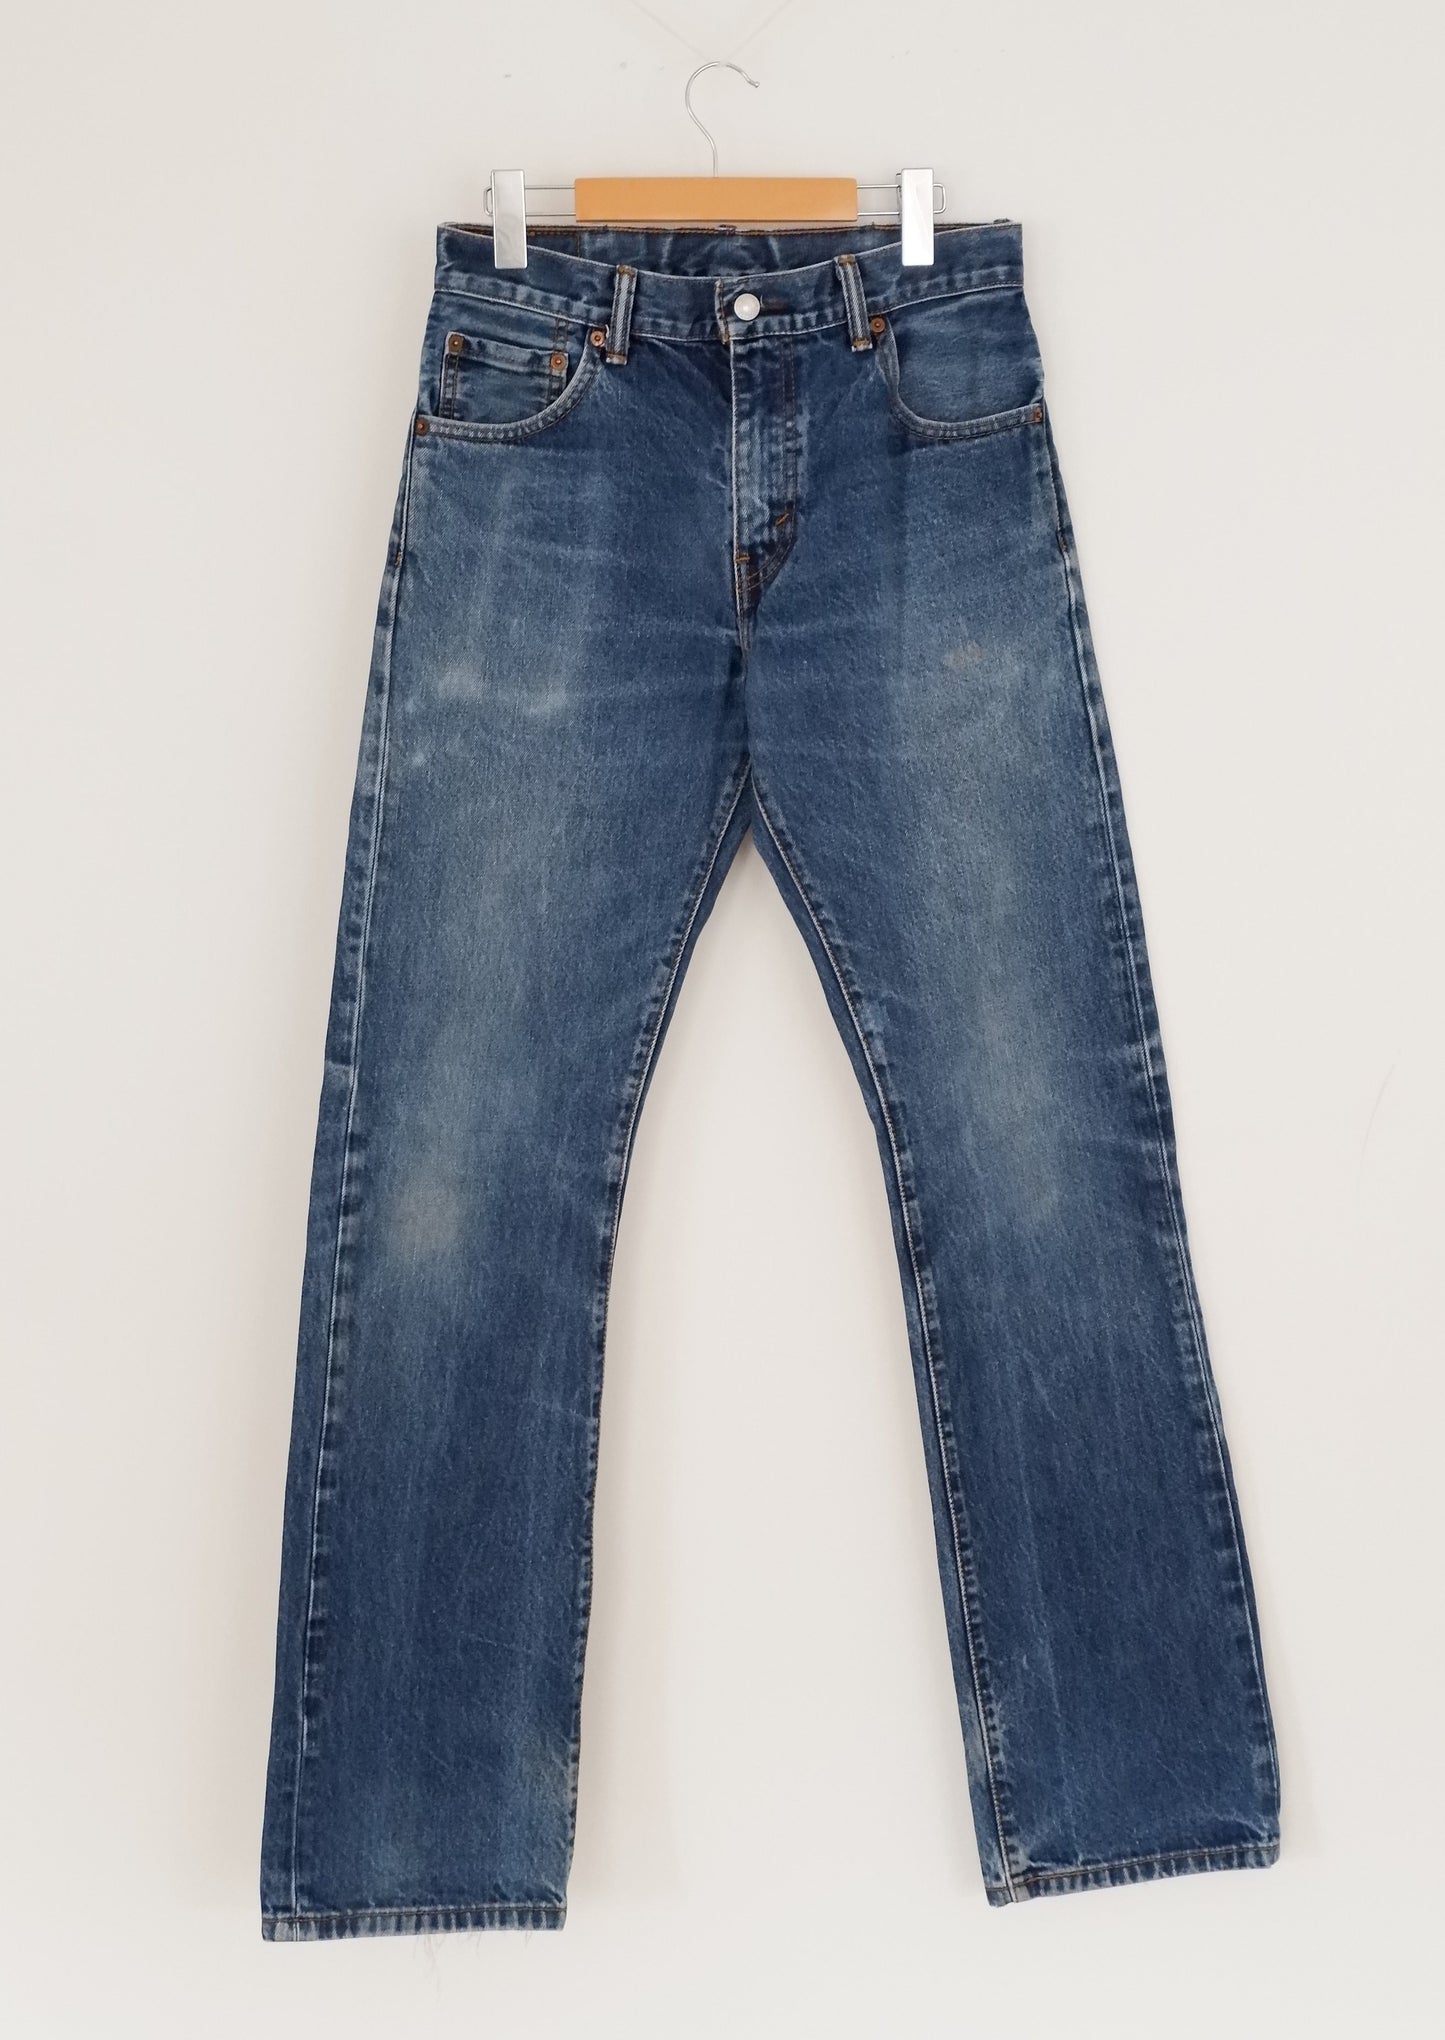 Levis 517 Dark Blue Faded Slim Fit Jeans - 30